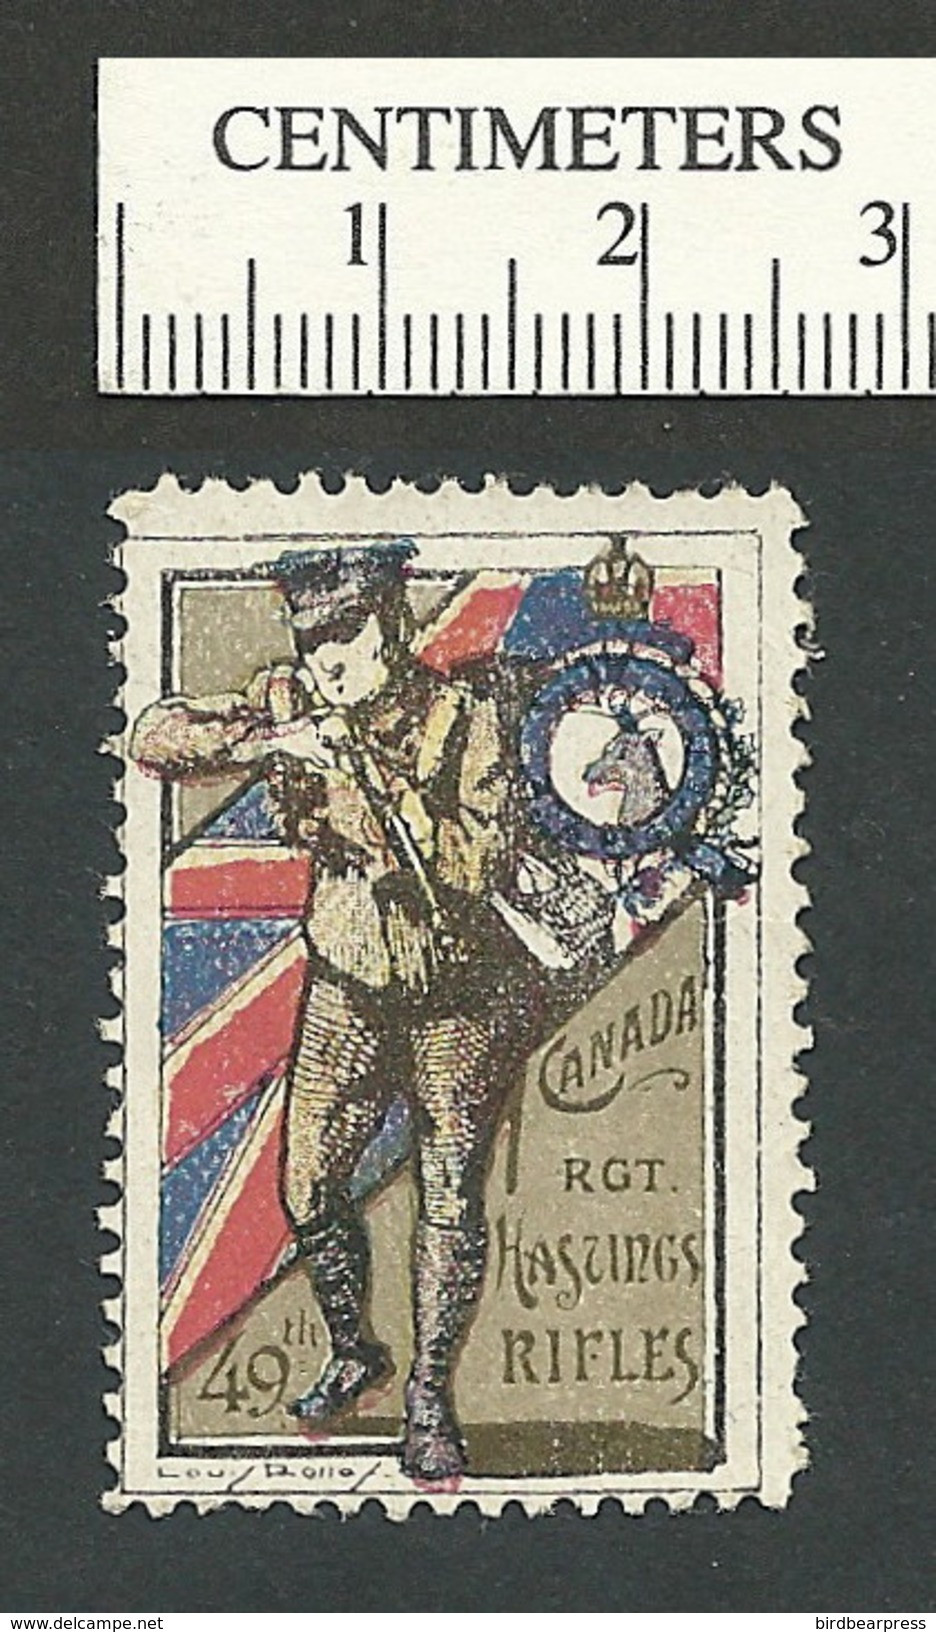 B46-45 CANADA WWI Delandre Hastings Rifles Stamp MNH Crease - Local, Strike, Seals & Cinderellas